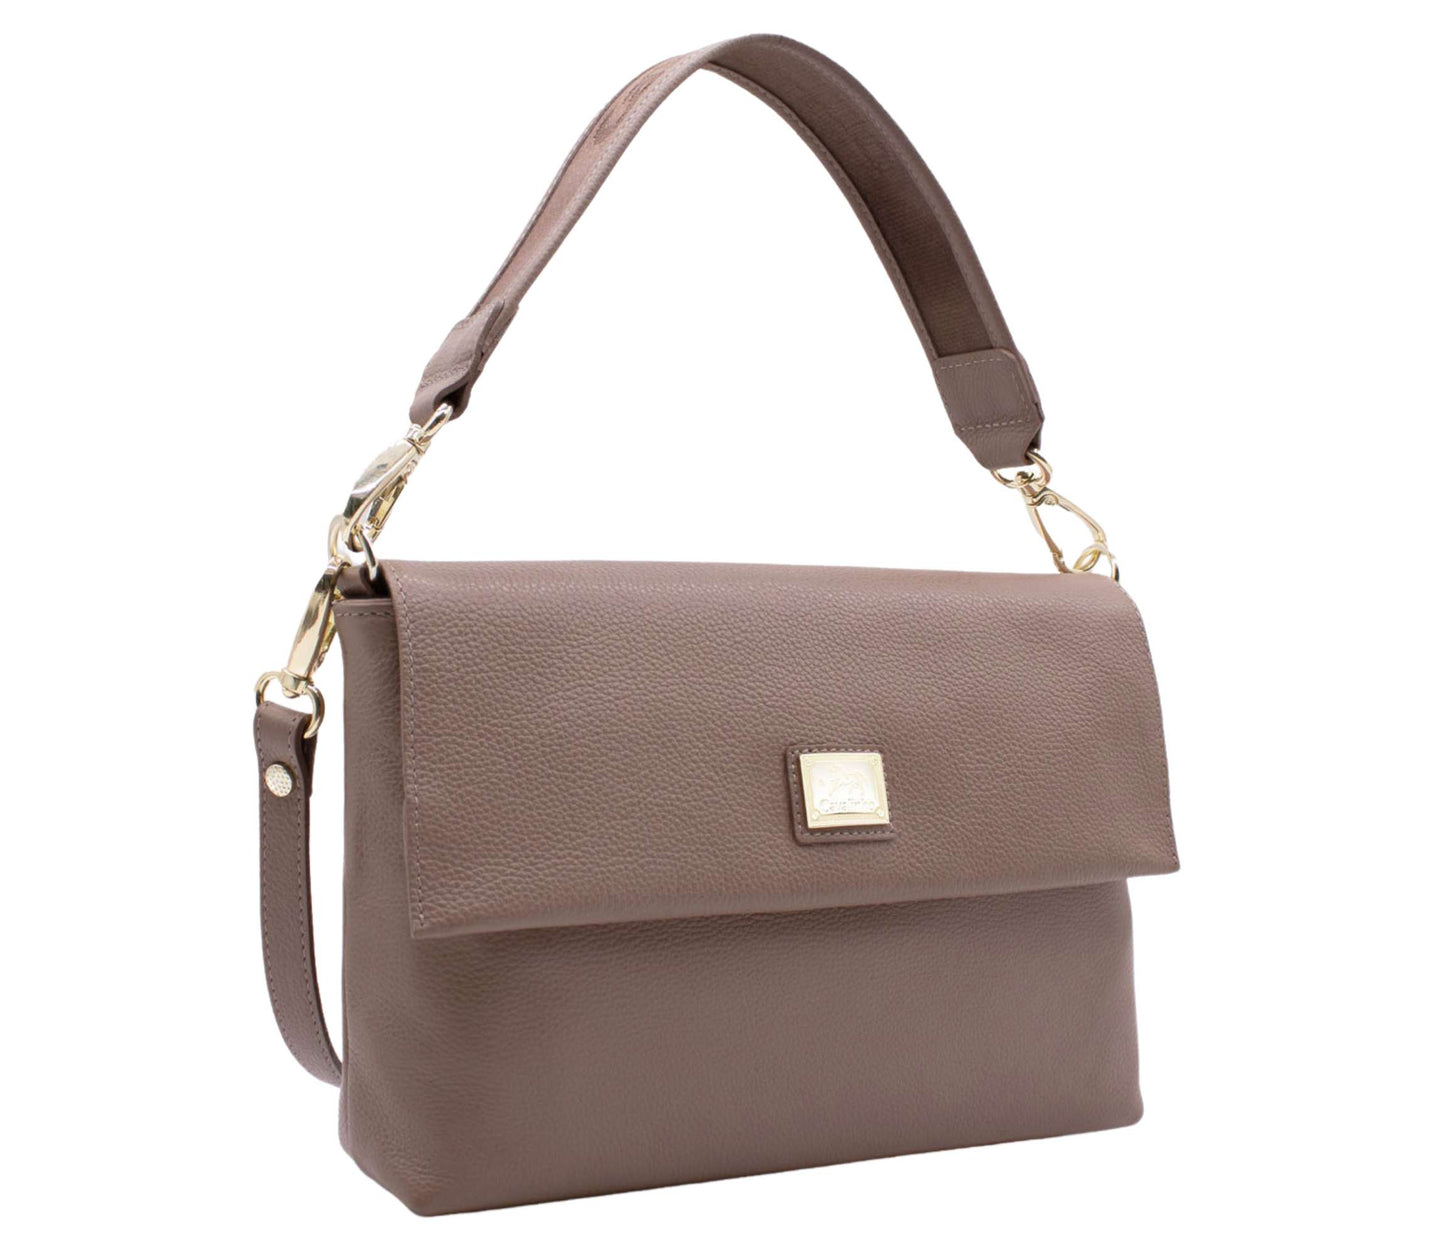 Cavalinho Muse 3 in 1: Leather Clutch, Handbag or Crossbody Bag - Sand - 18300509.07.99_2